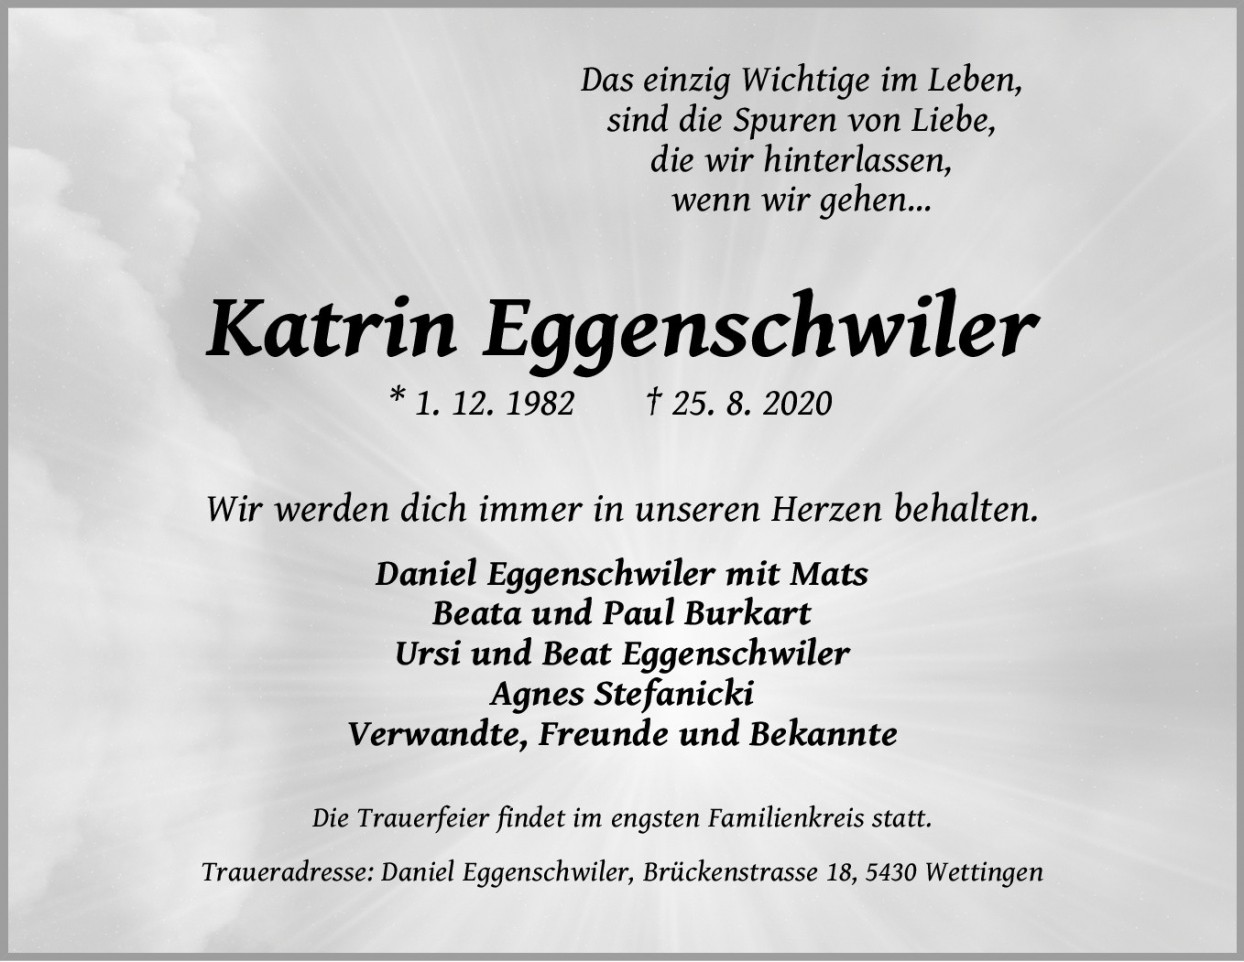 Katrin Eggenschwiler